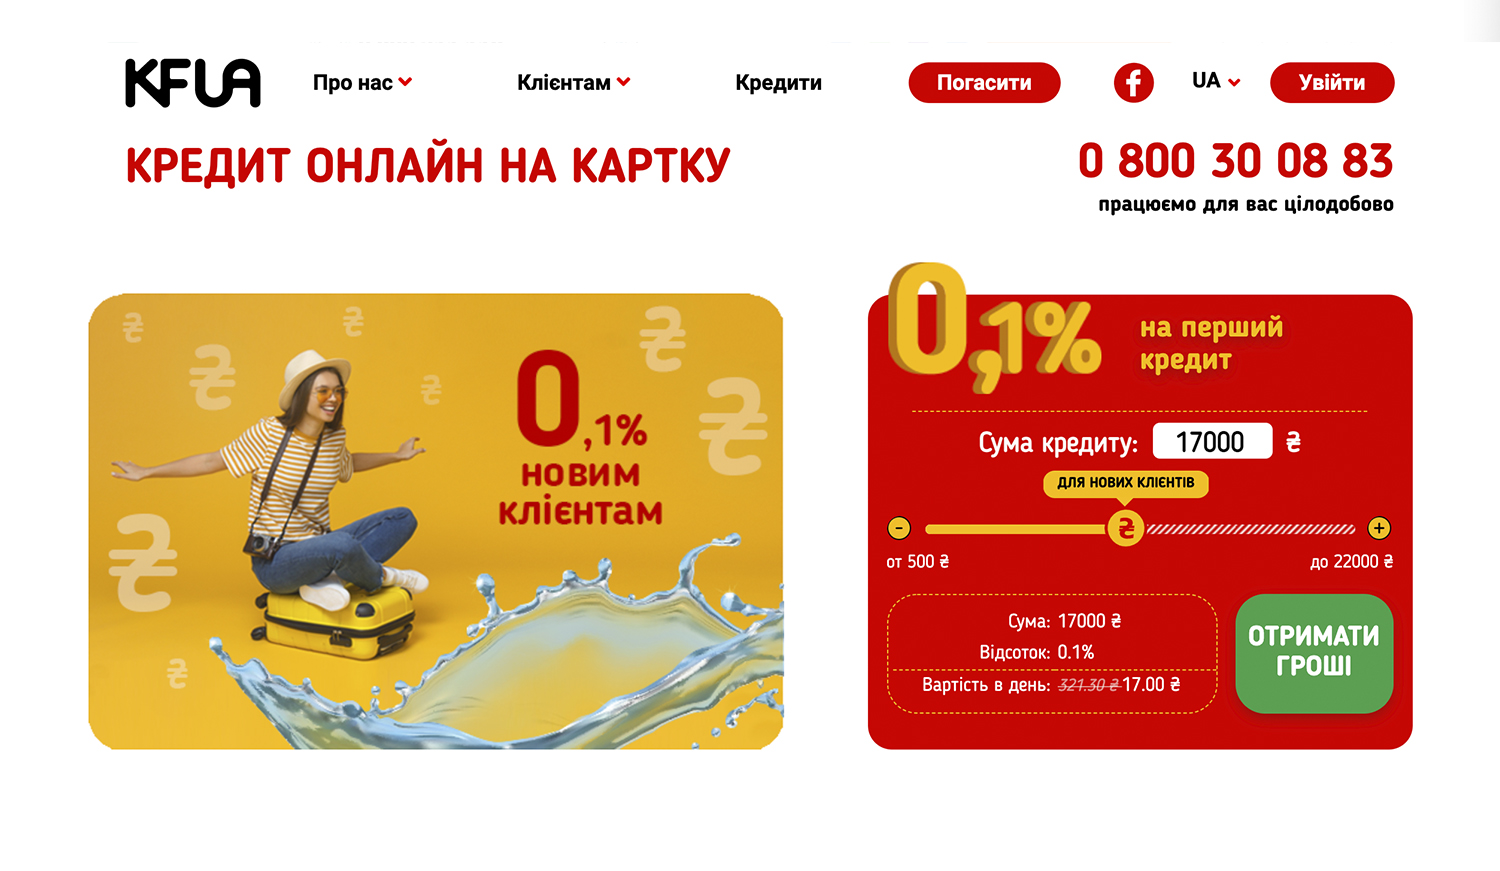 KF.ua оформити кредит калькулятор